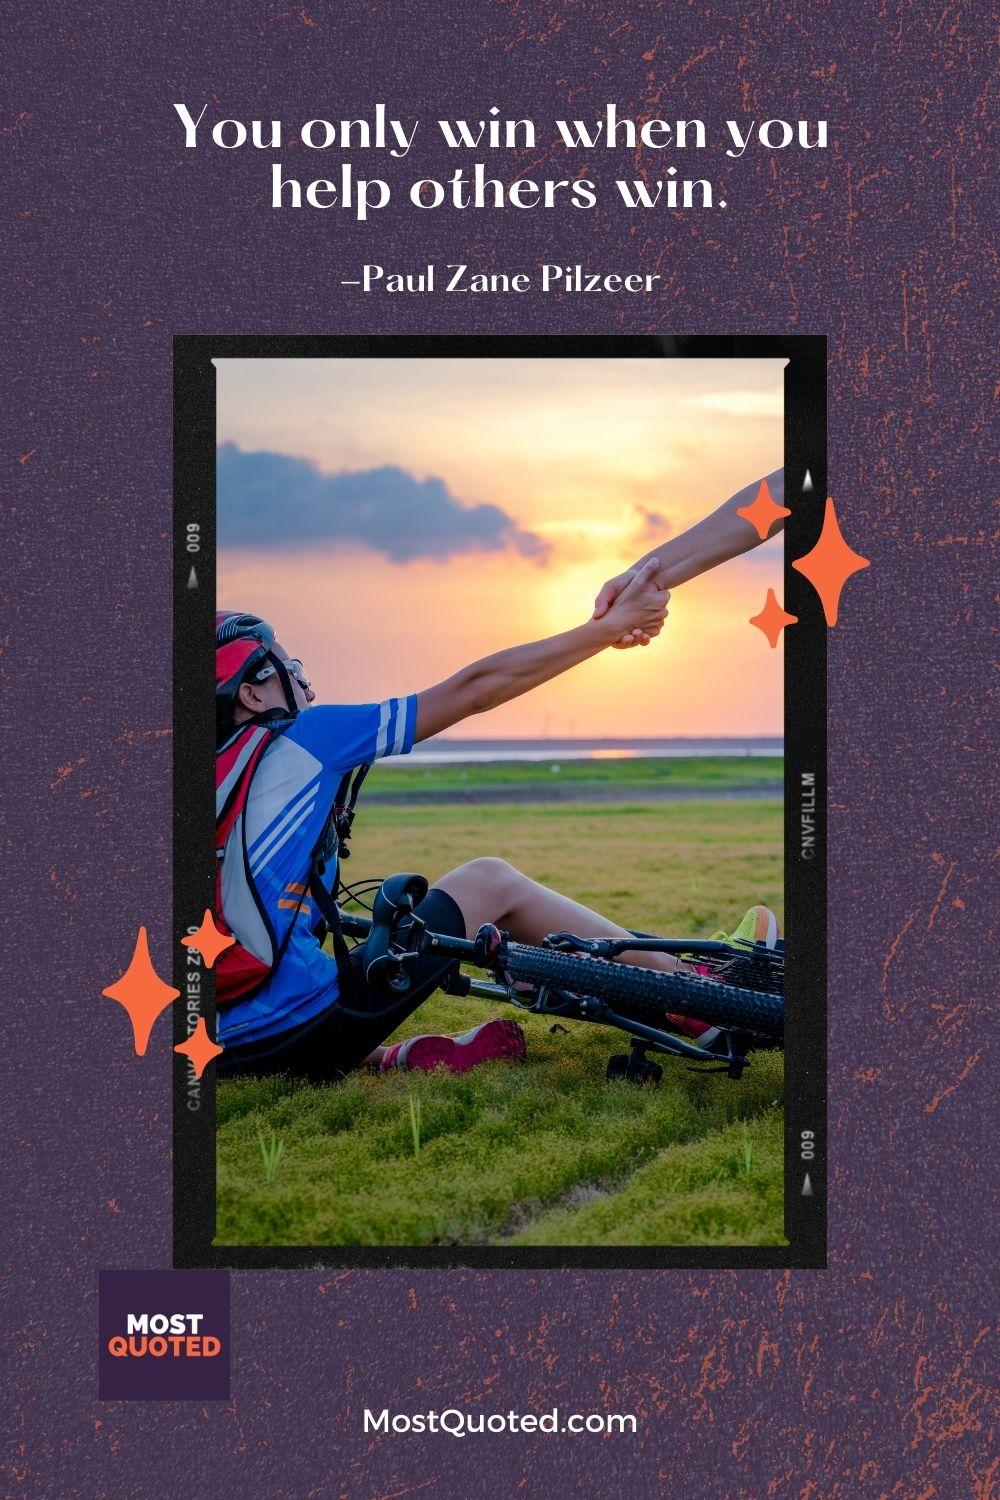 You only win when you help others win. - Paul Zane Pilzeer